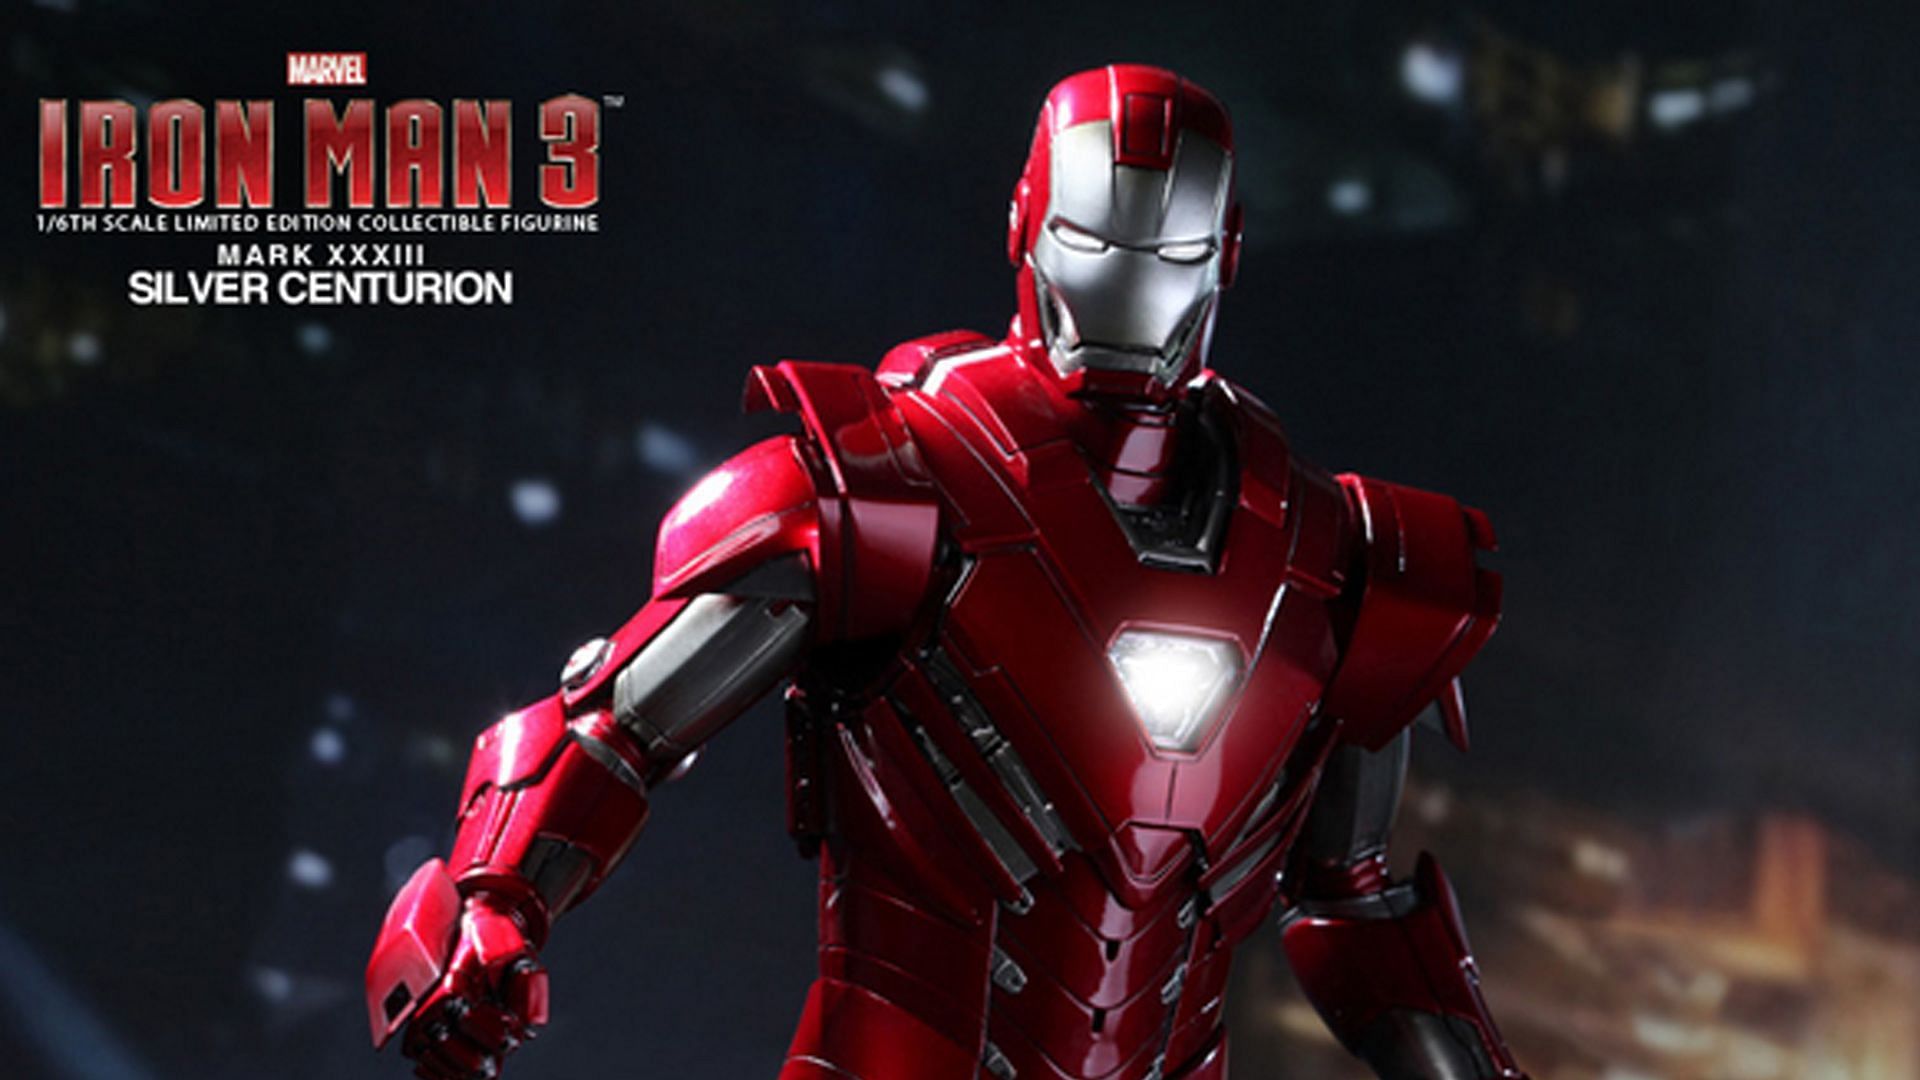 The Silver Centurion Iron Man suit (Image via Marvel)